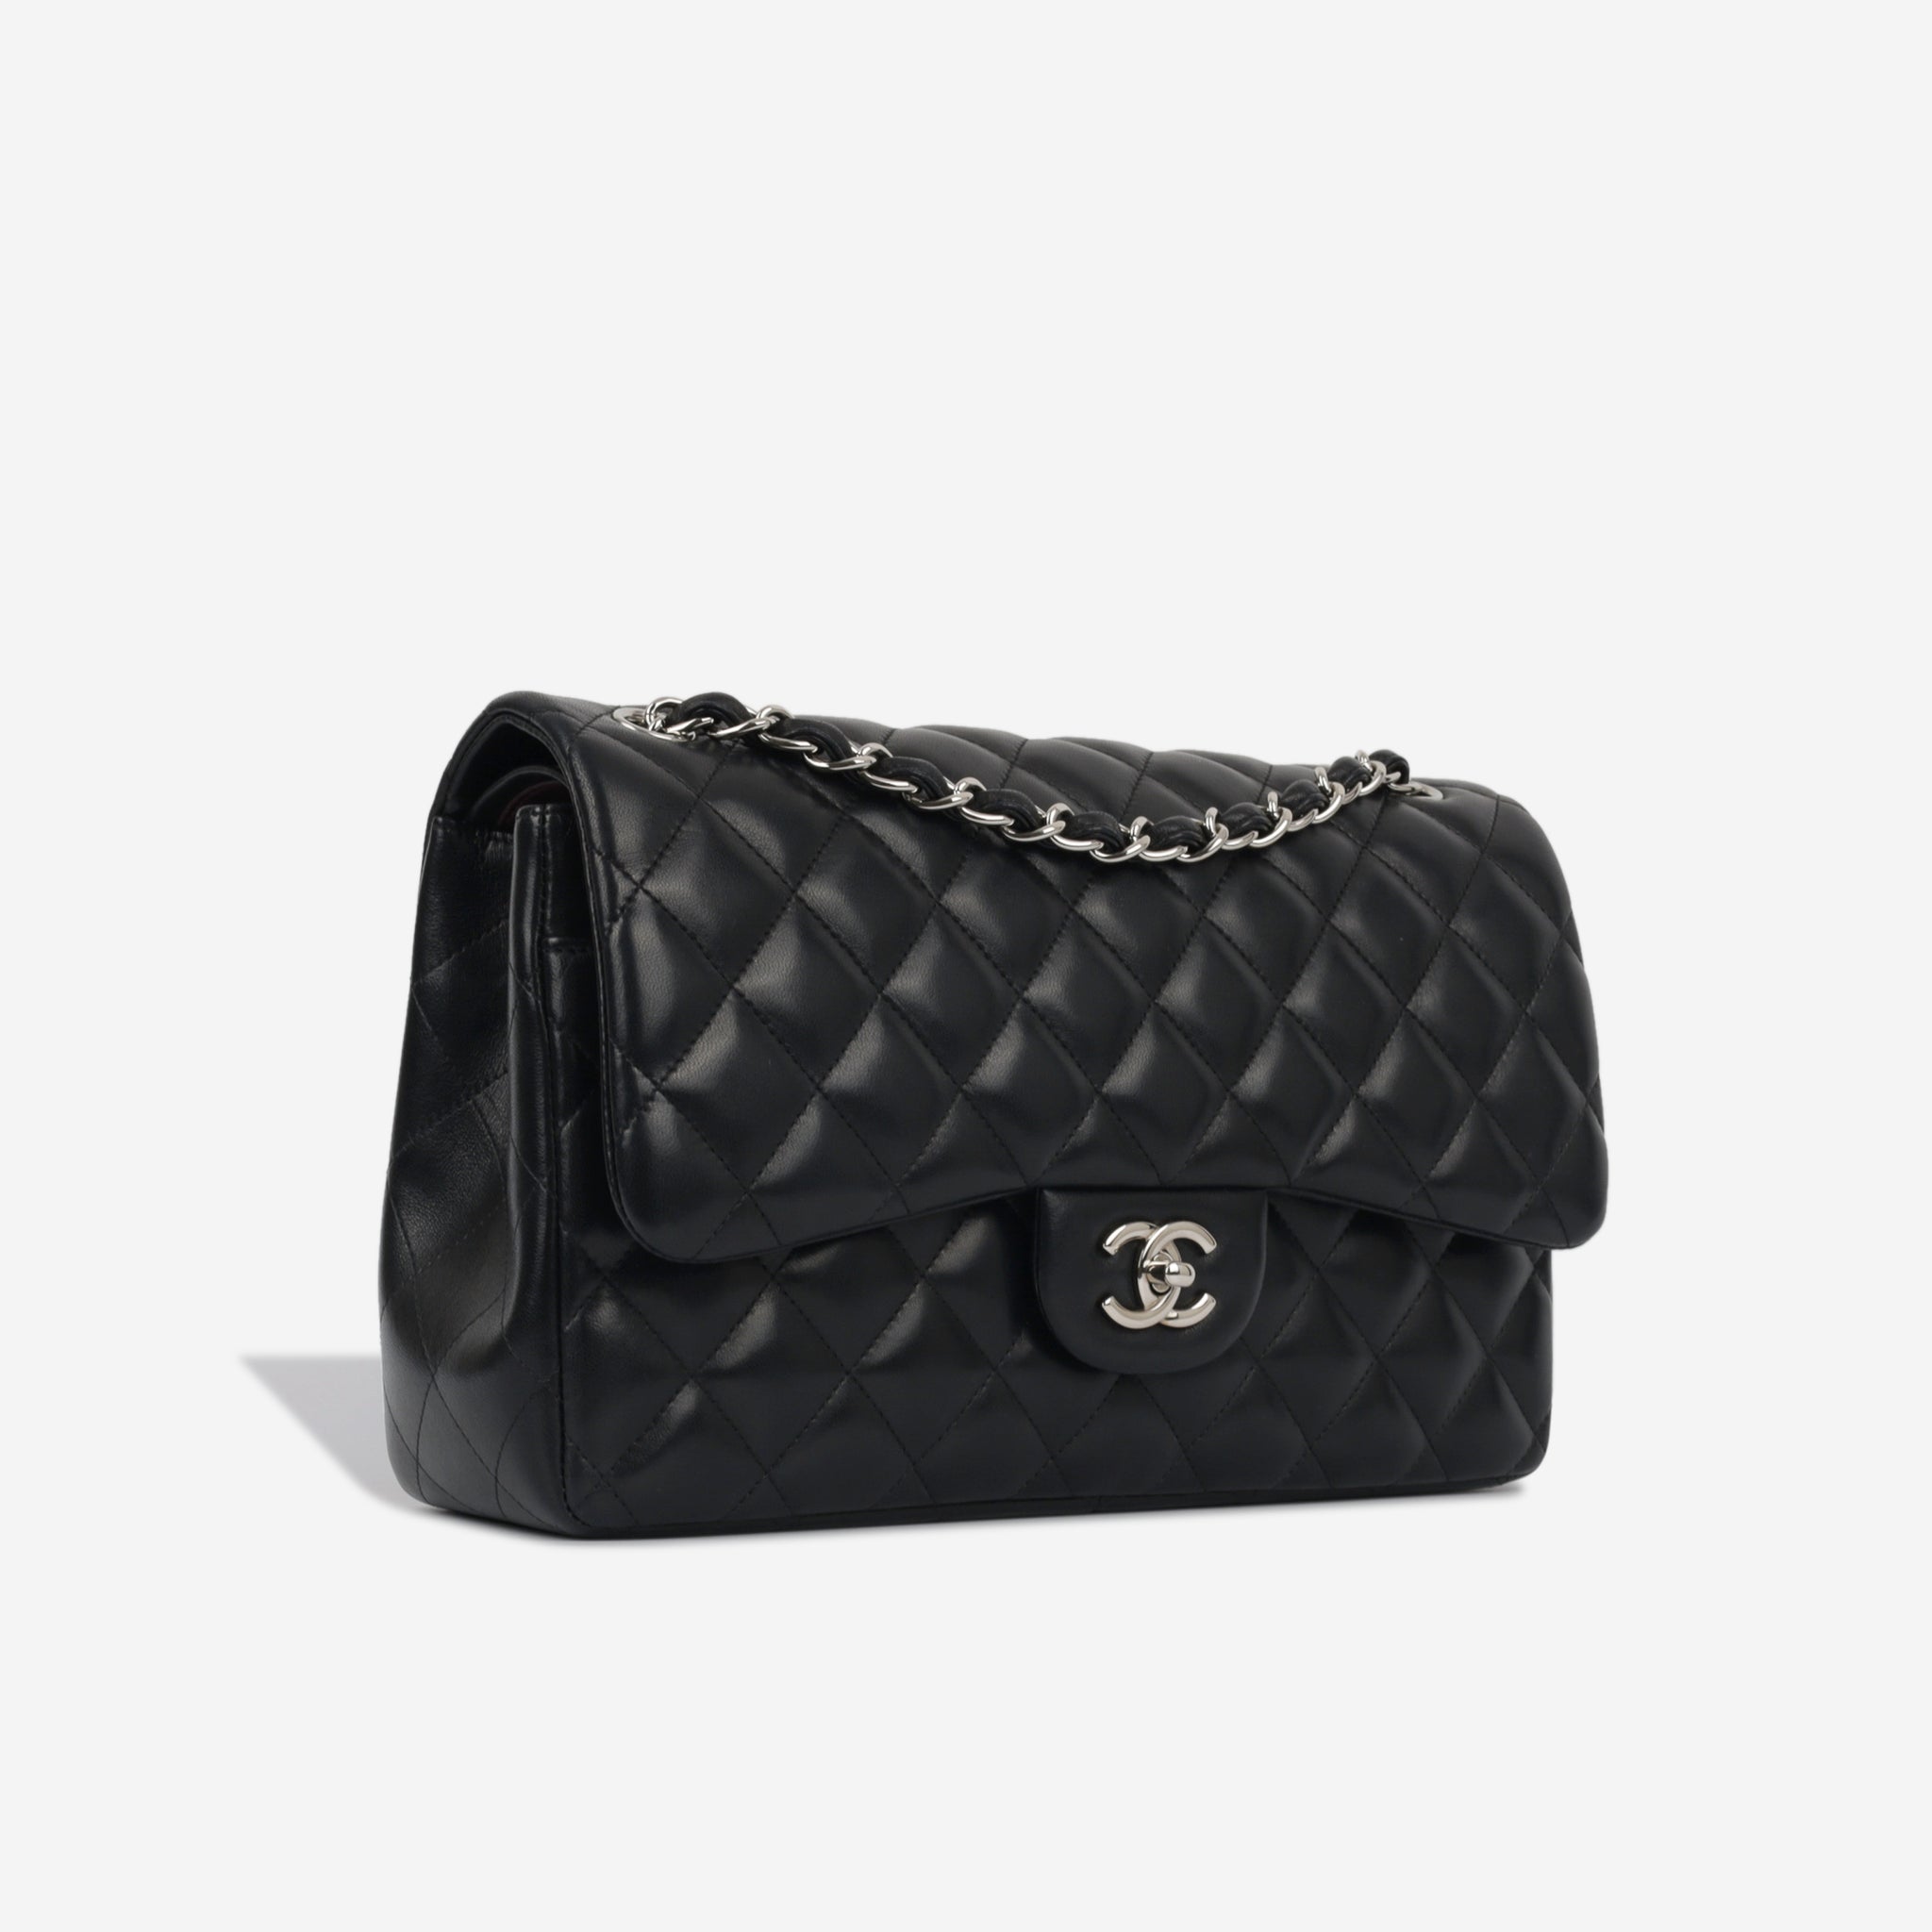 Chanel - Classic Flap Bag - Jumbo - Black Lambskin - SHW - Pre-Loved